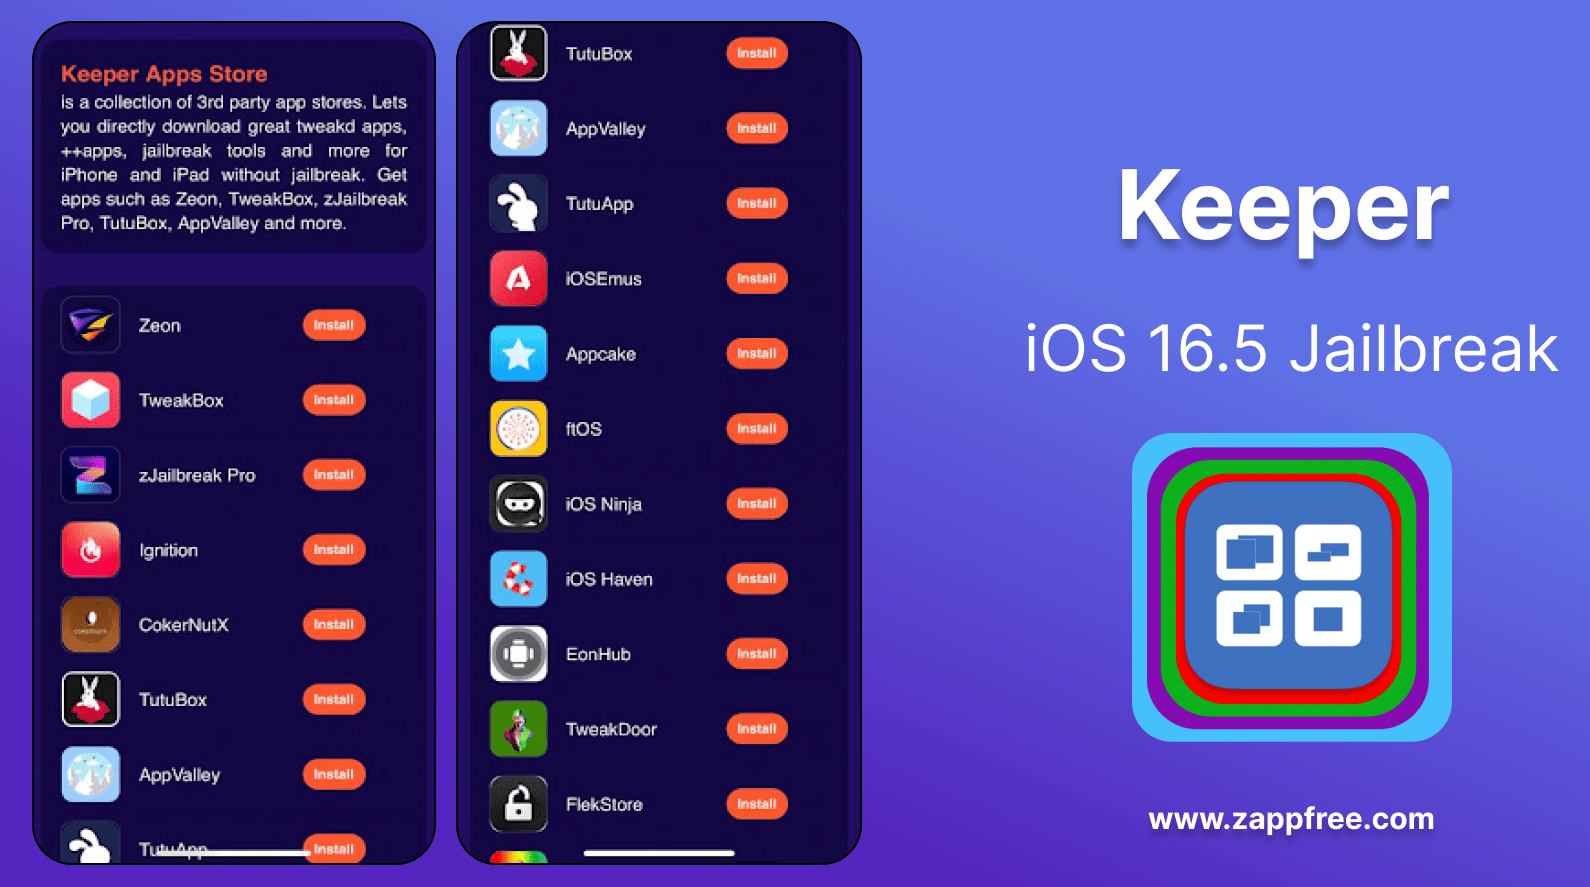 Keeper for iOS 16.5 Jailbreak